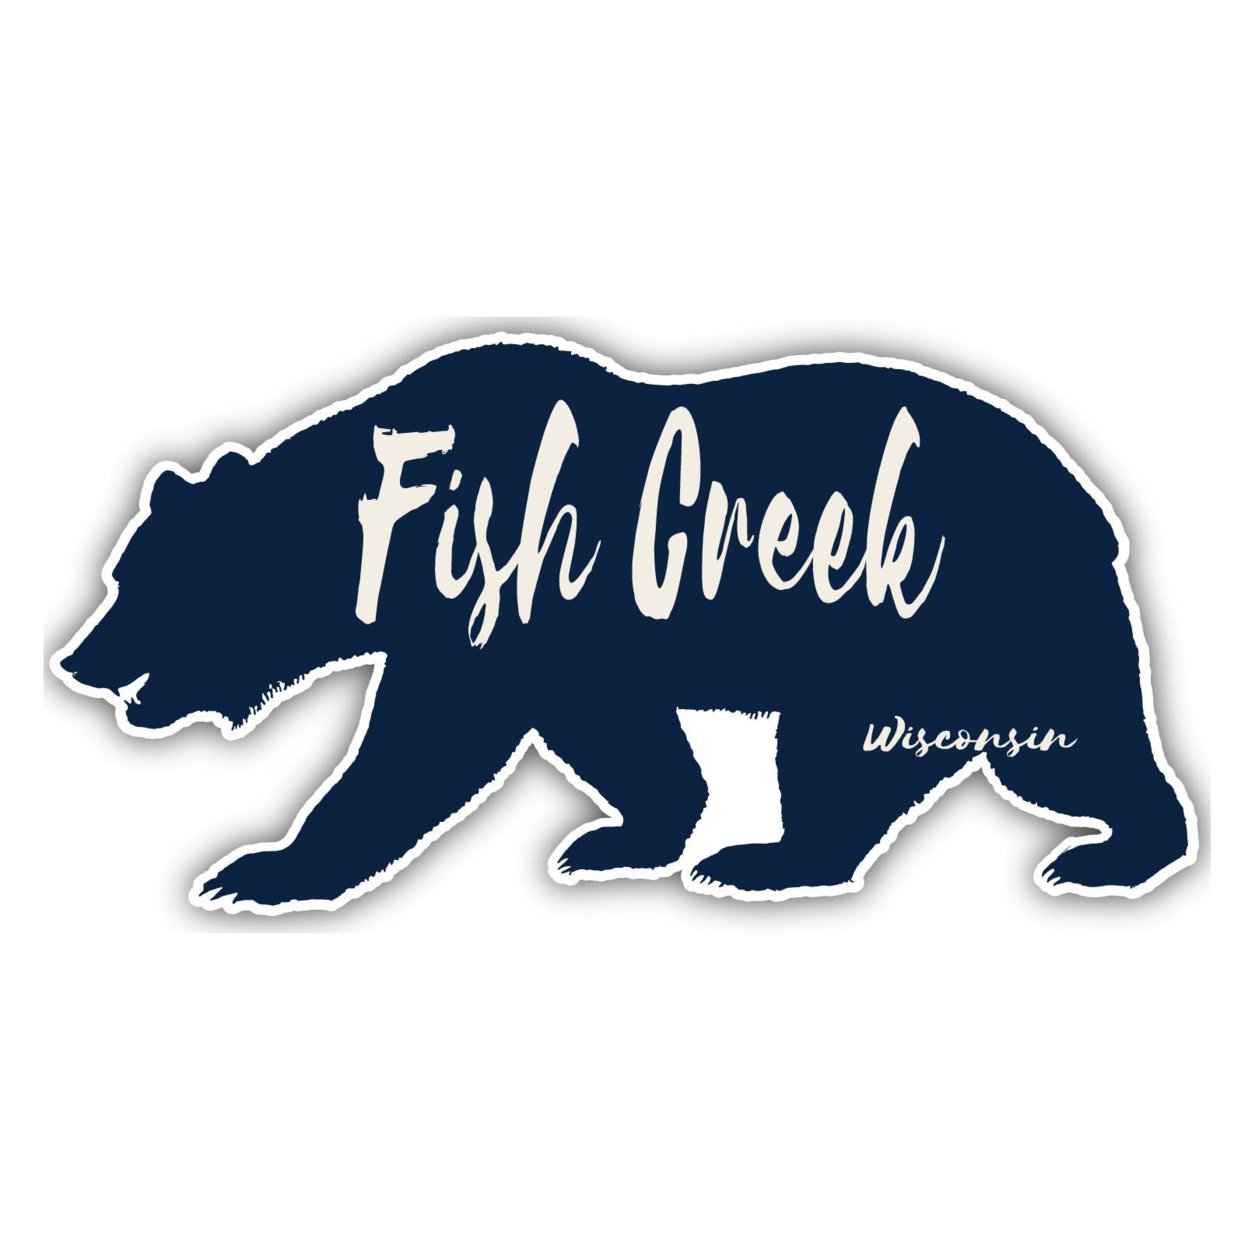 Fish Creek Wisconsin Souvenir Decorative Stickers (Choose Theme And Size) - Single Unit, 2-Inch, Bear